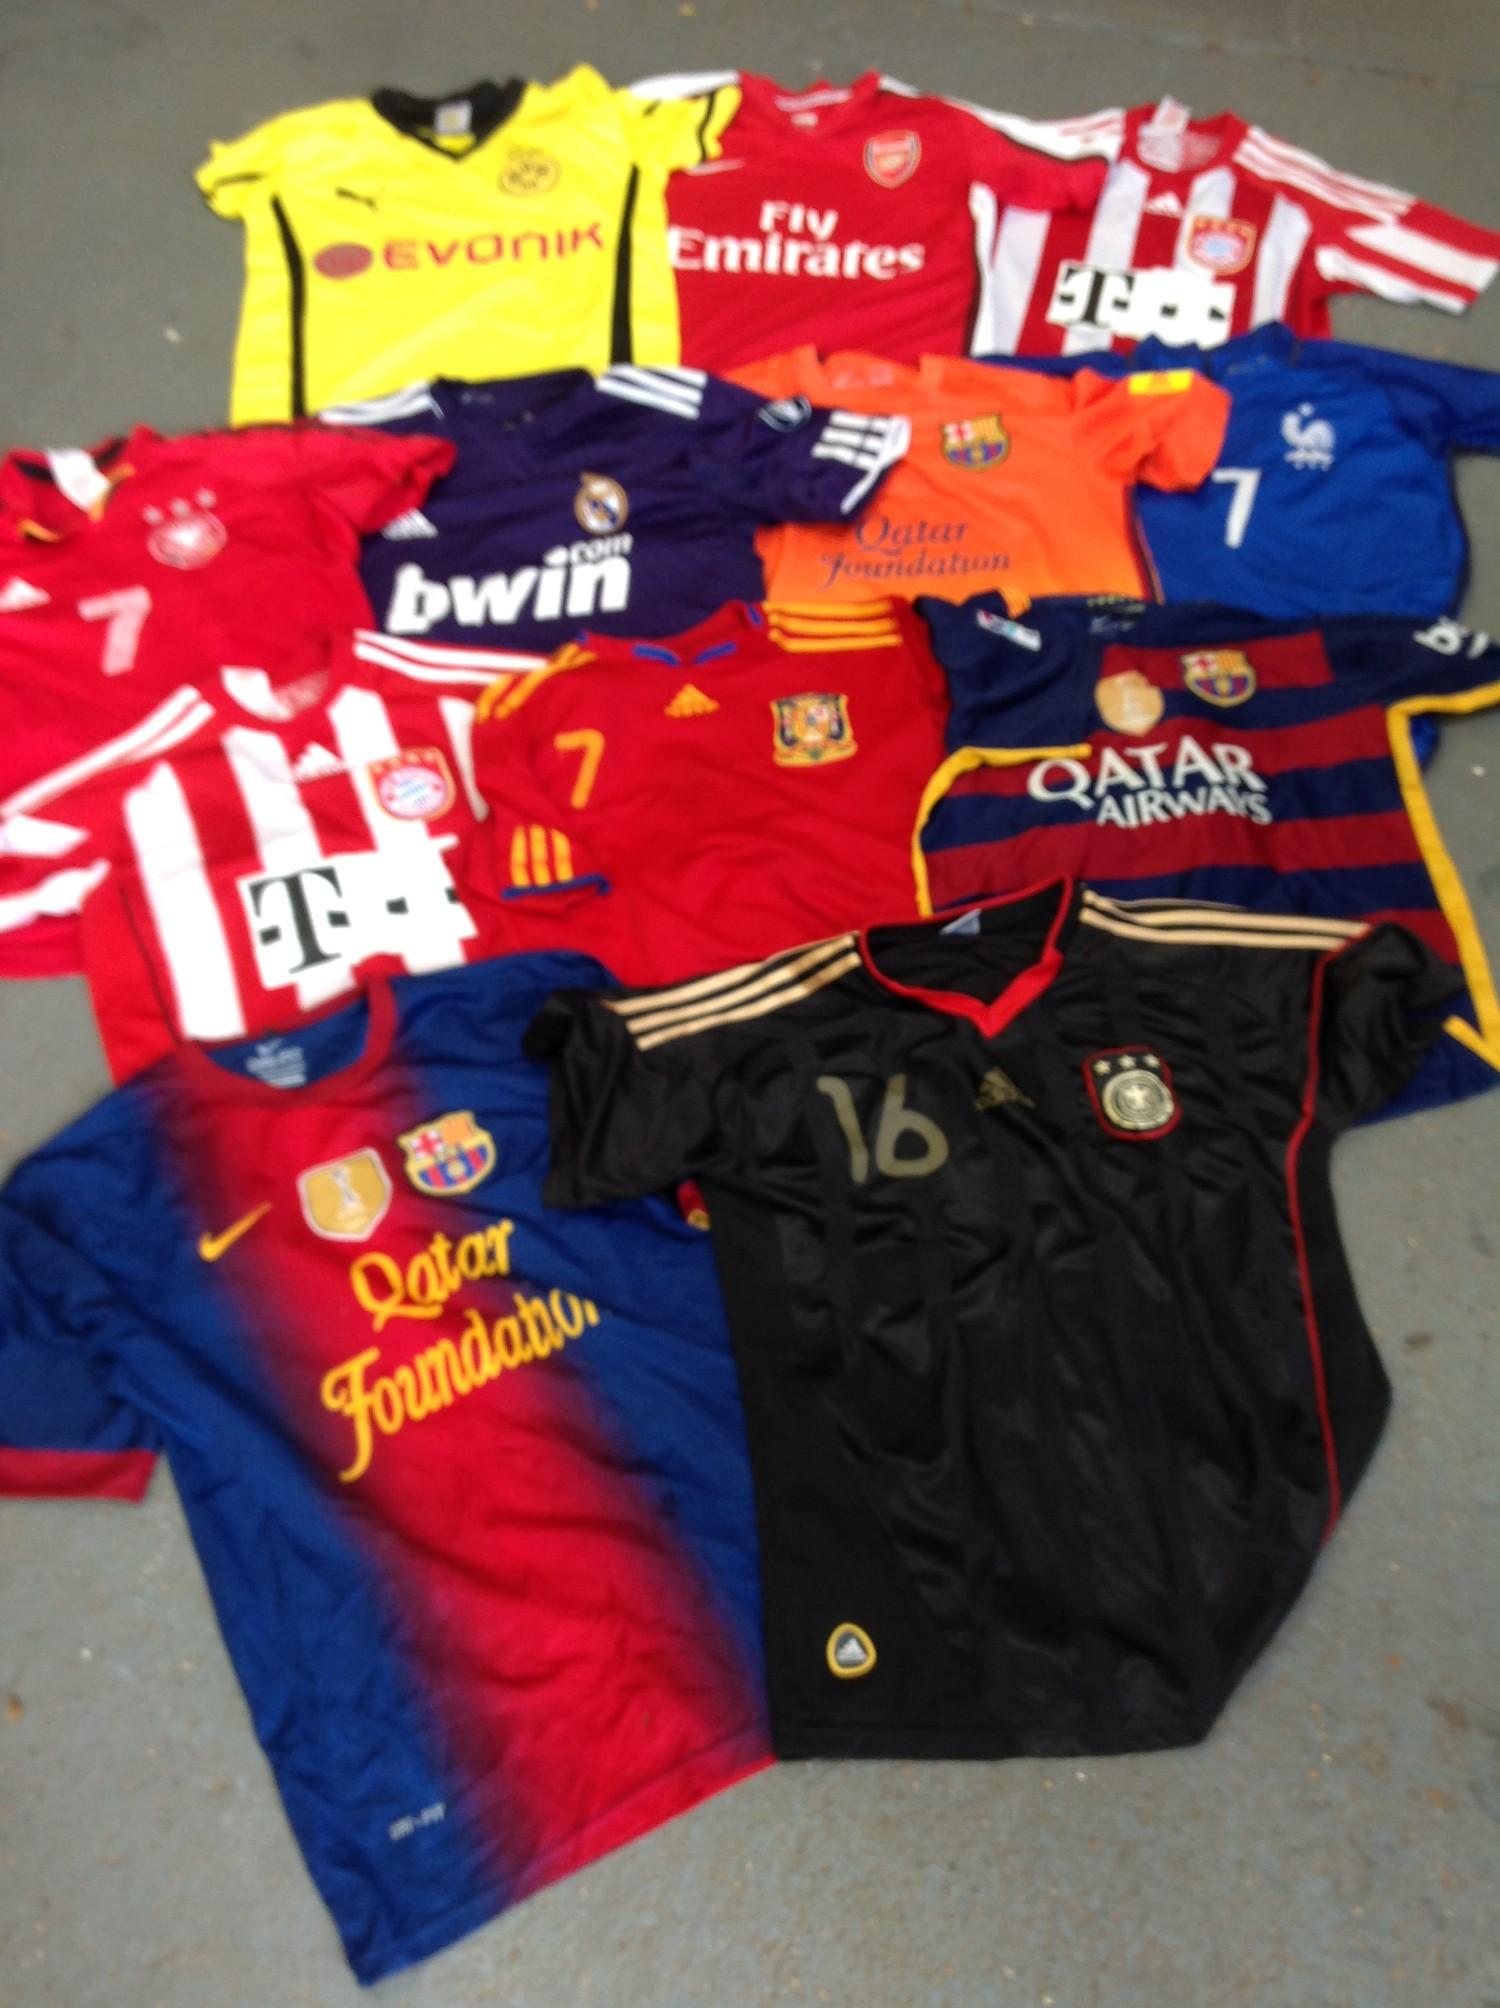 Quantity of Football Shirts - Spain, France, Germany, Bayern Munich - Mainly Large Boys Size - Image 2 of 2